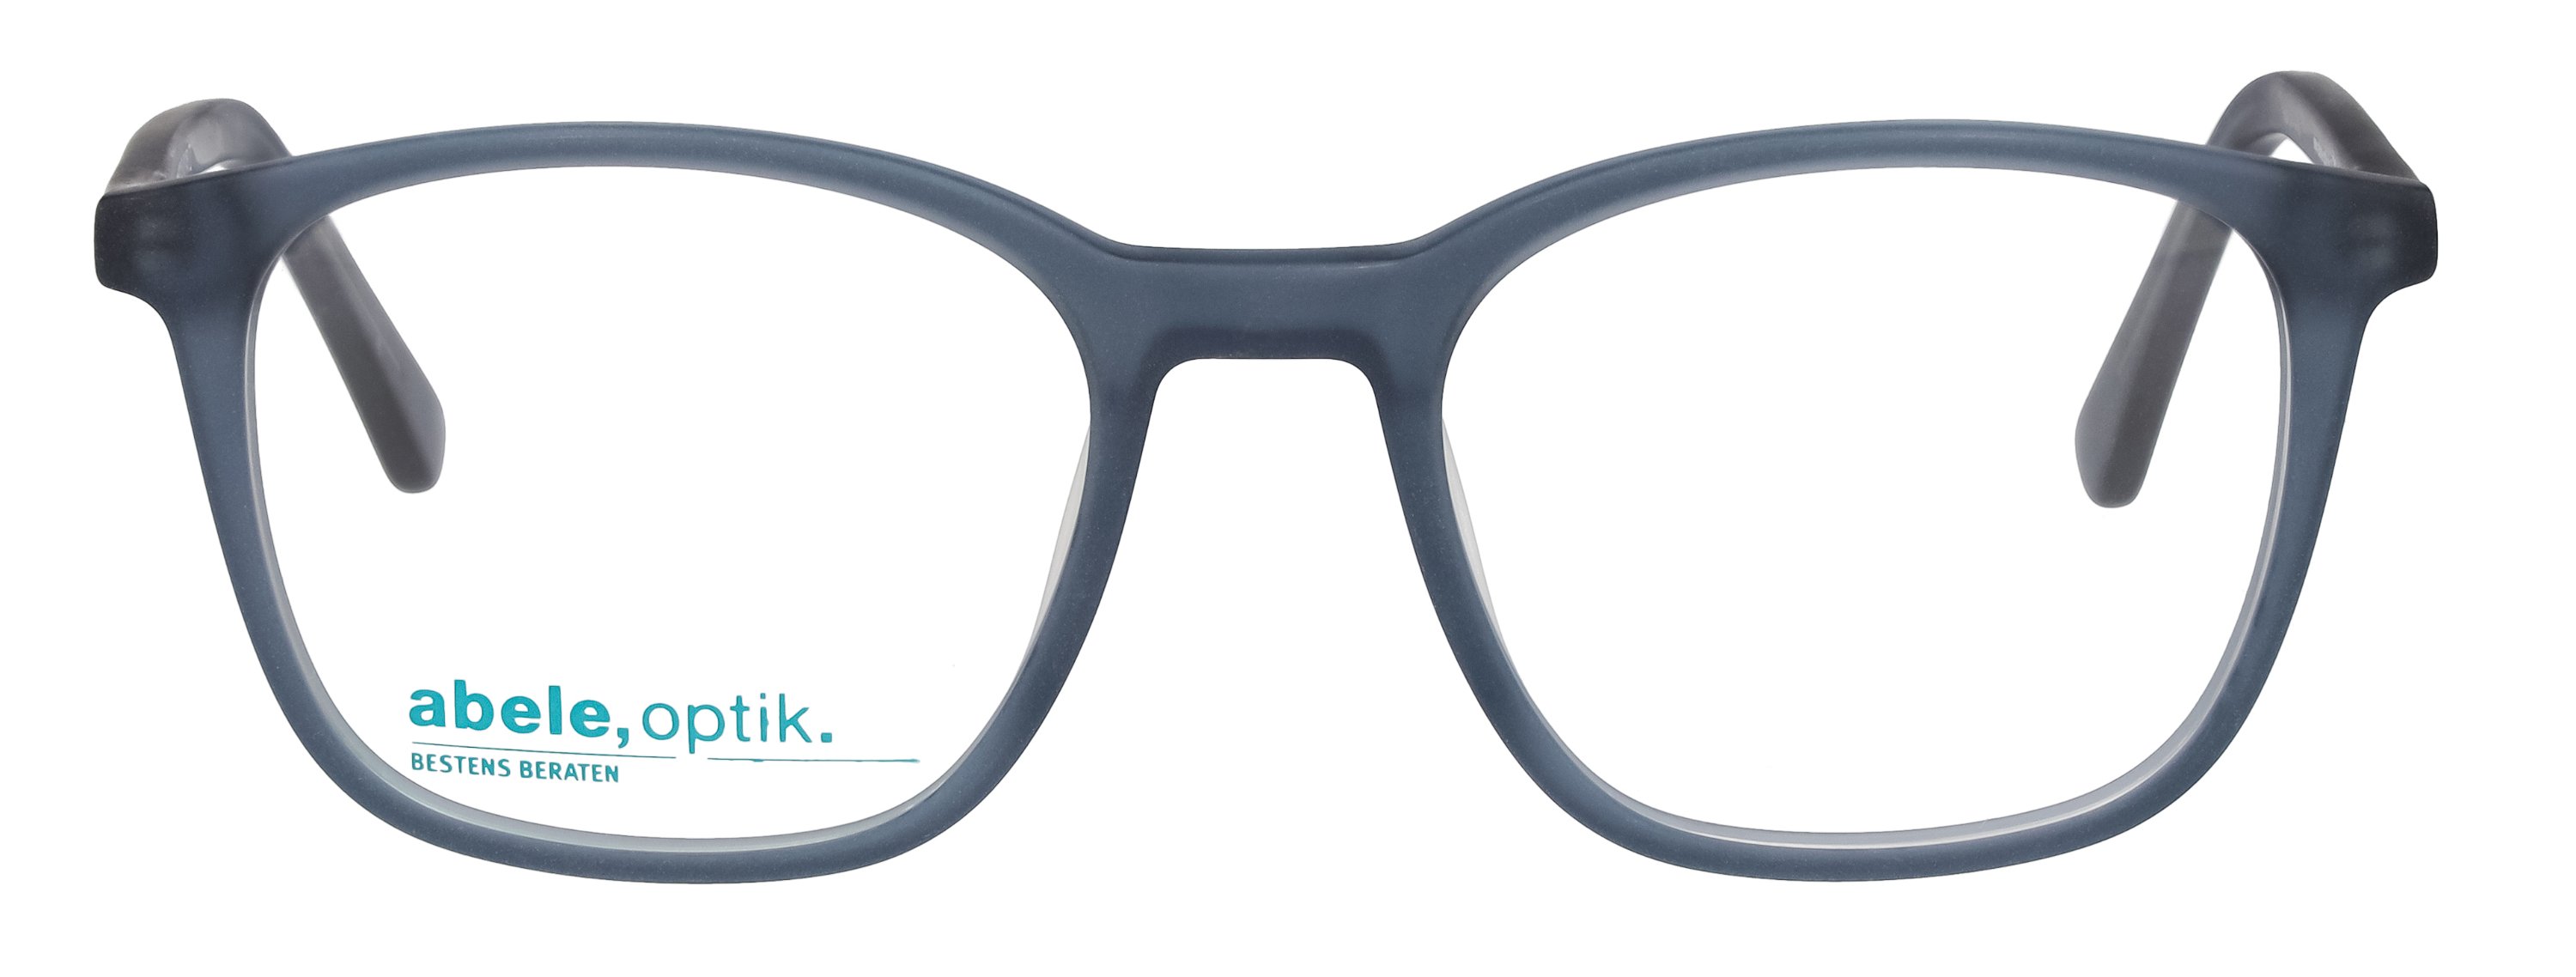 abele optik Brille für Herren in dunkelblau matt 148311